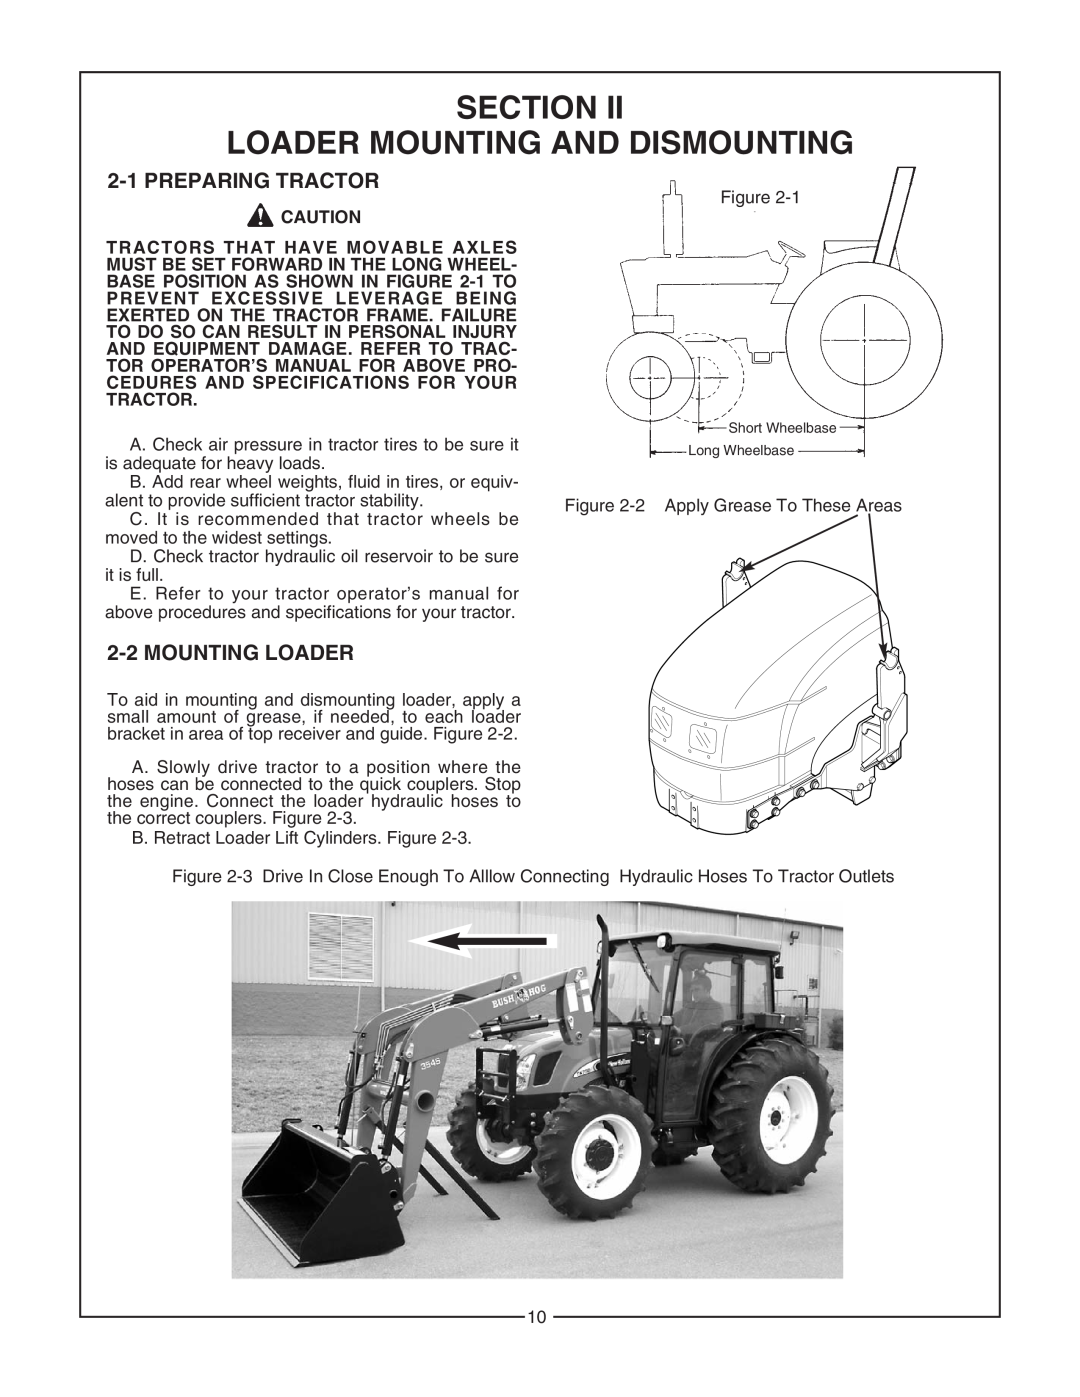 Bush Hog 5045 manual Section Loader Mounting And Dismounting, Preparing Tractor, Mounting Loader 